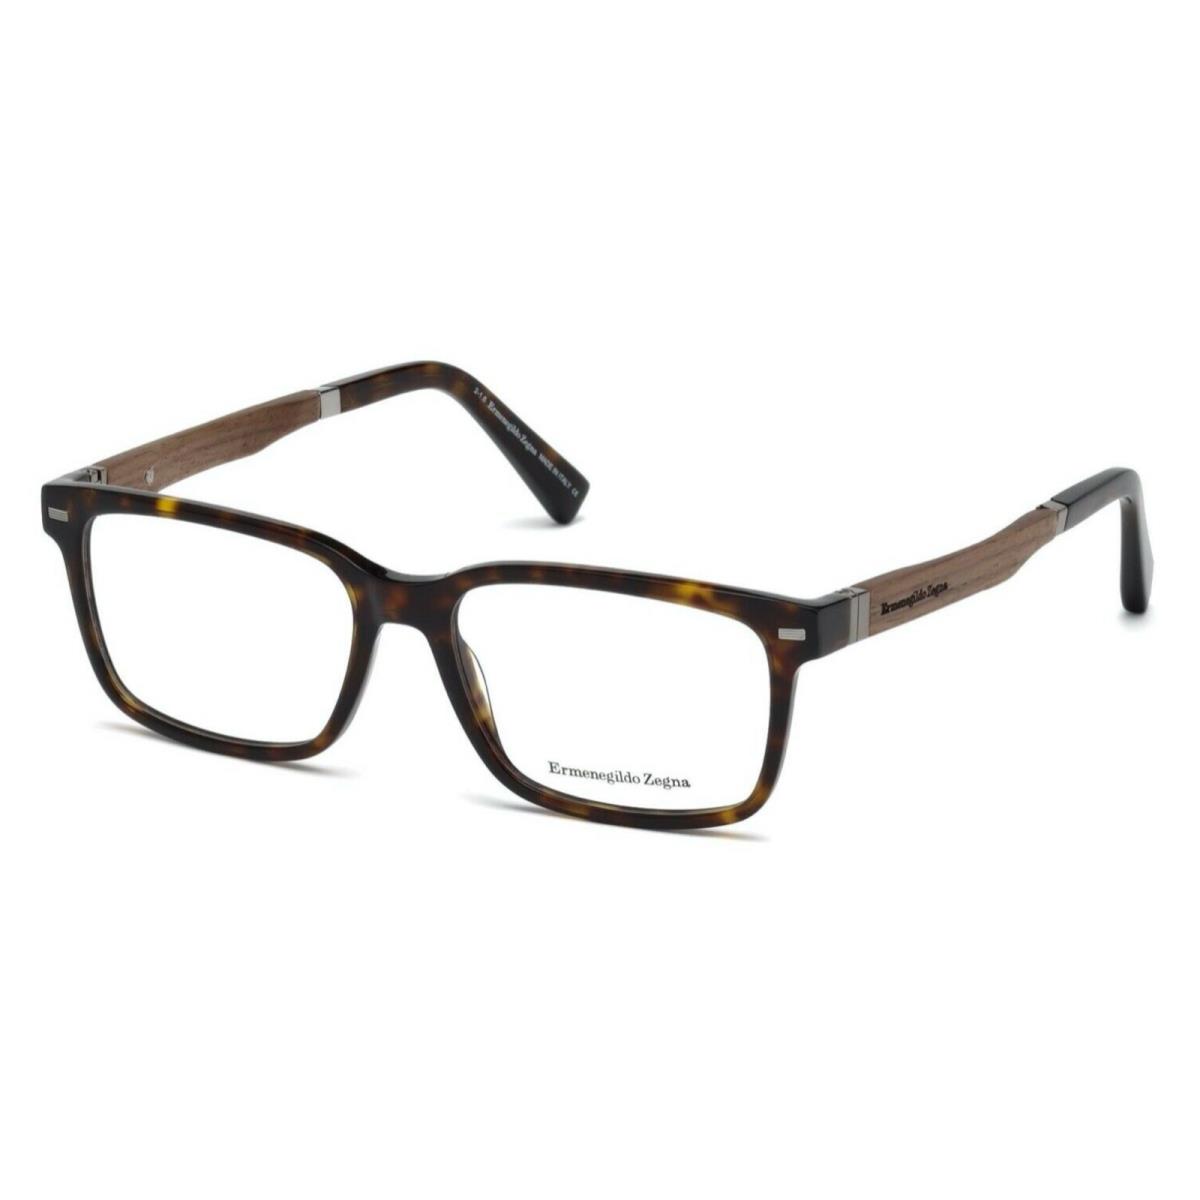 Ermenegildo Zegna Eyeglasses EZ 5078 052 55-16 Tortoise Wood Frames